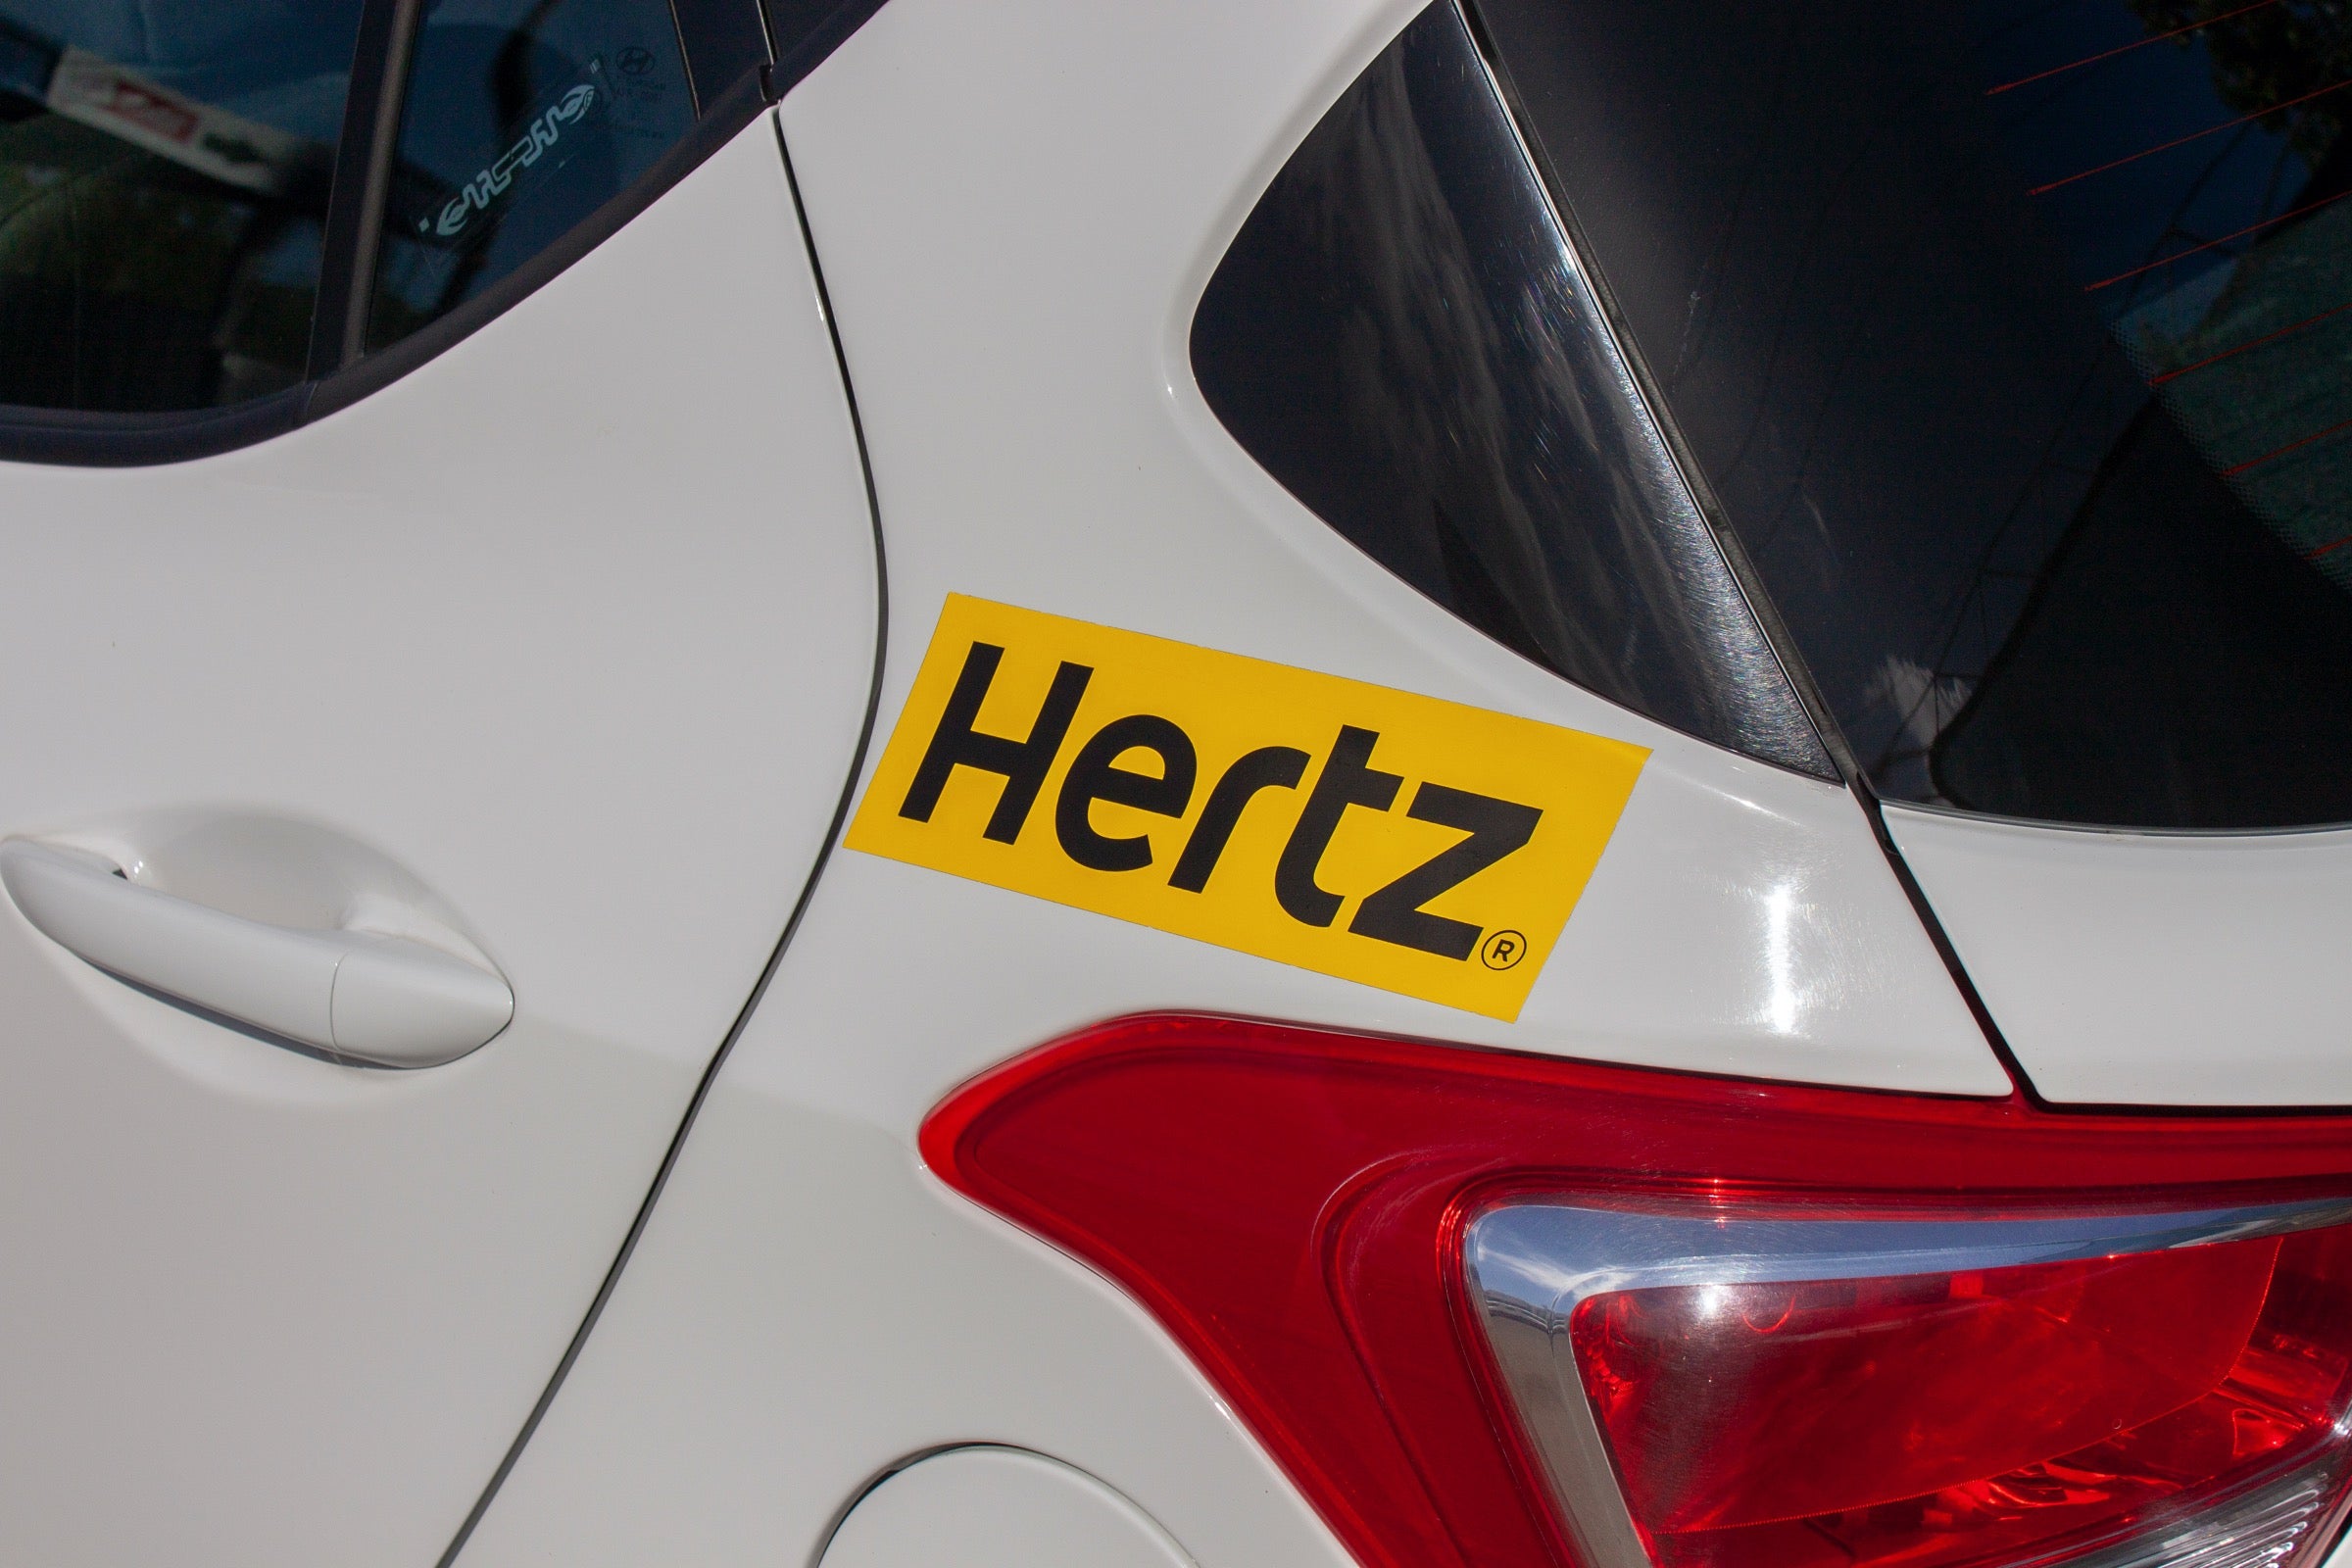 Hyundai car with a Hertz sticker